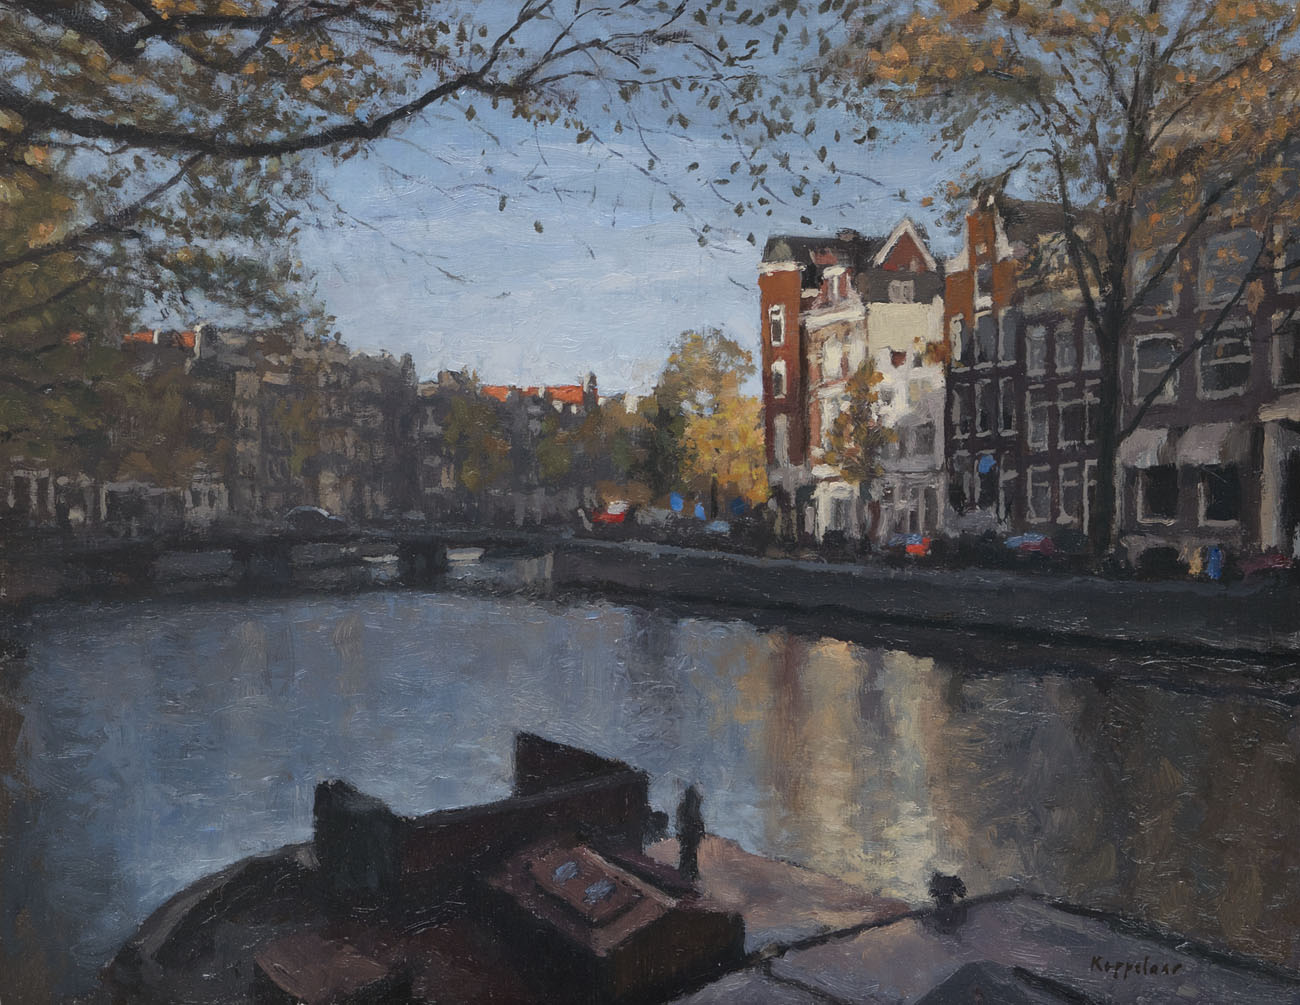 cityscape: 'Late sunlight at Singel' oil on panel by Dutch painter Frans Koppelaar.